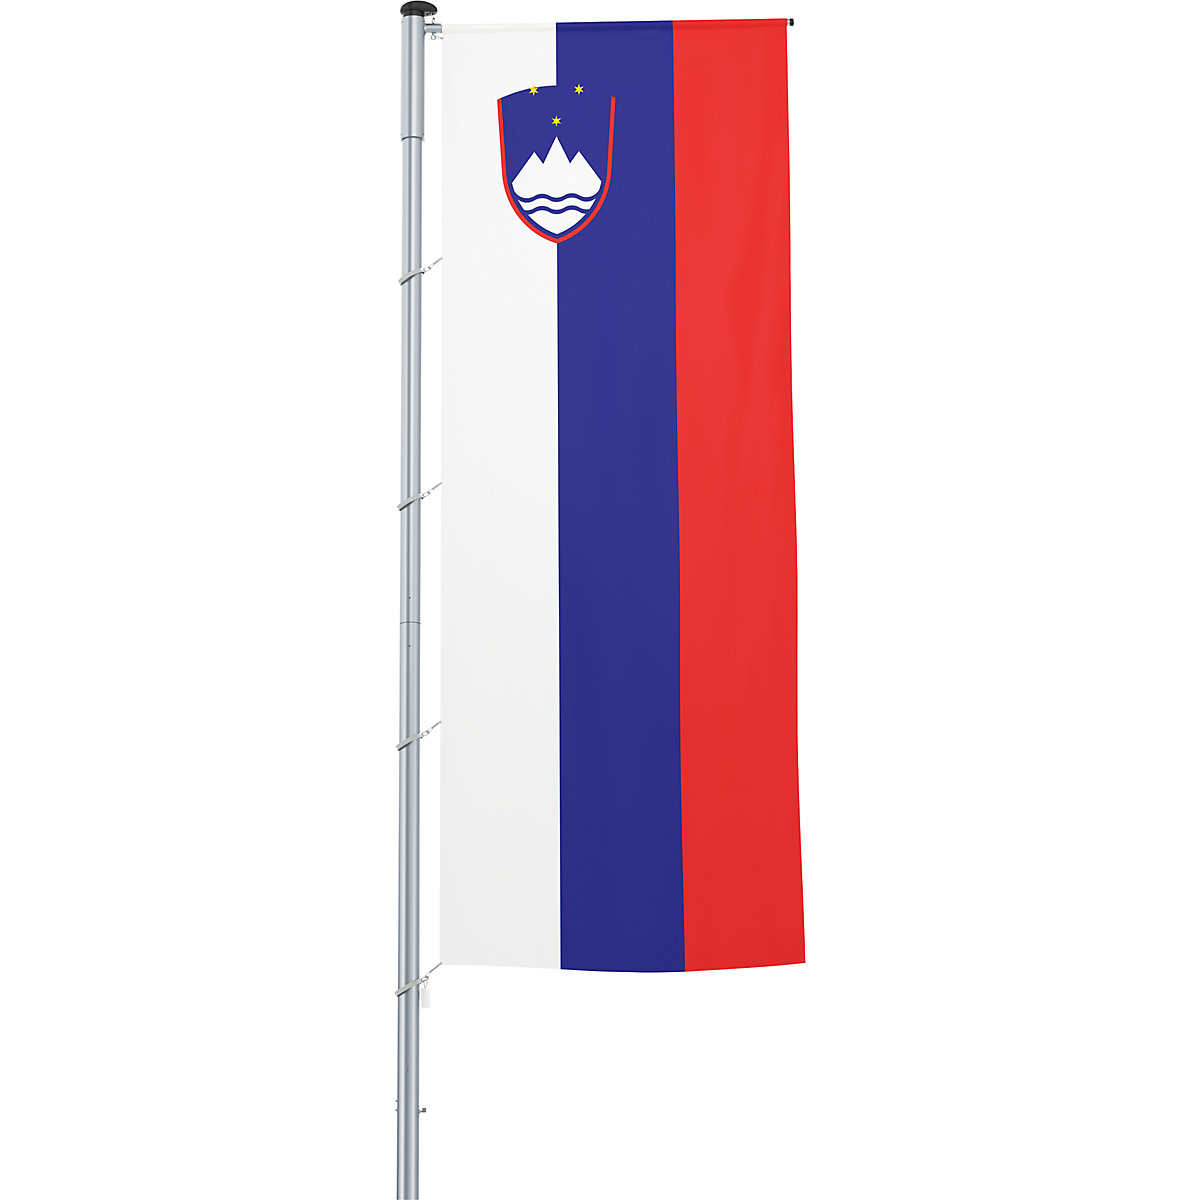 Steag pentru braț/drapel național – Mannus, format 1,2 x 3 m, Slovenia-12